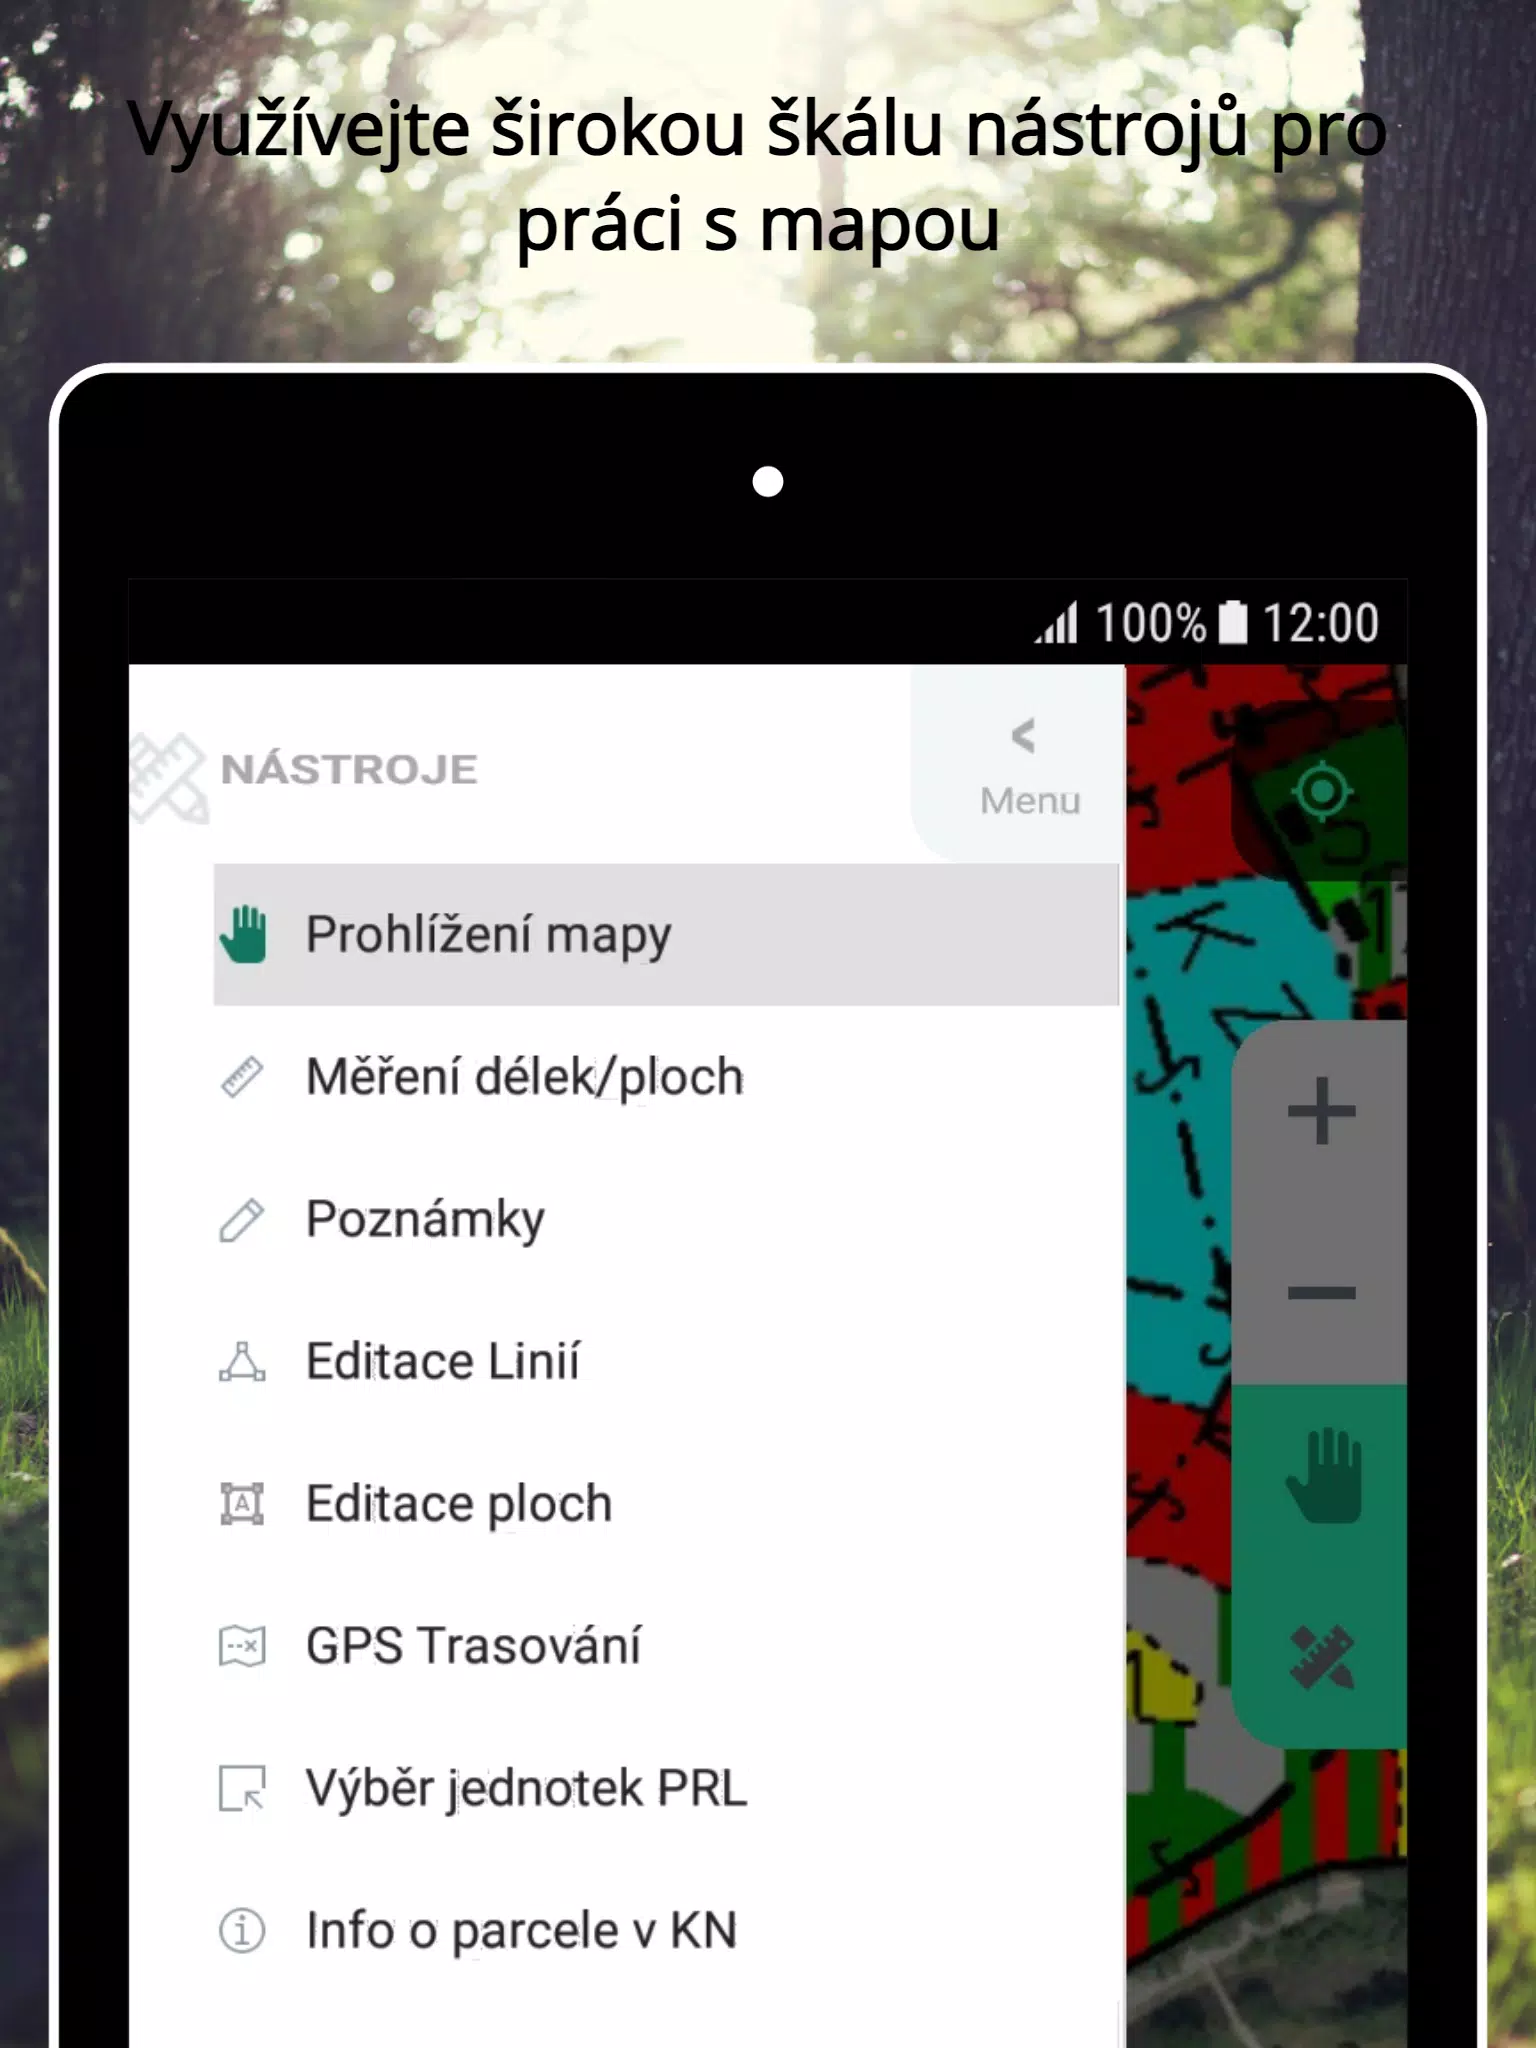 Mobilní LHP APK for Android Download